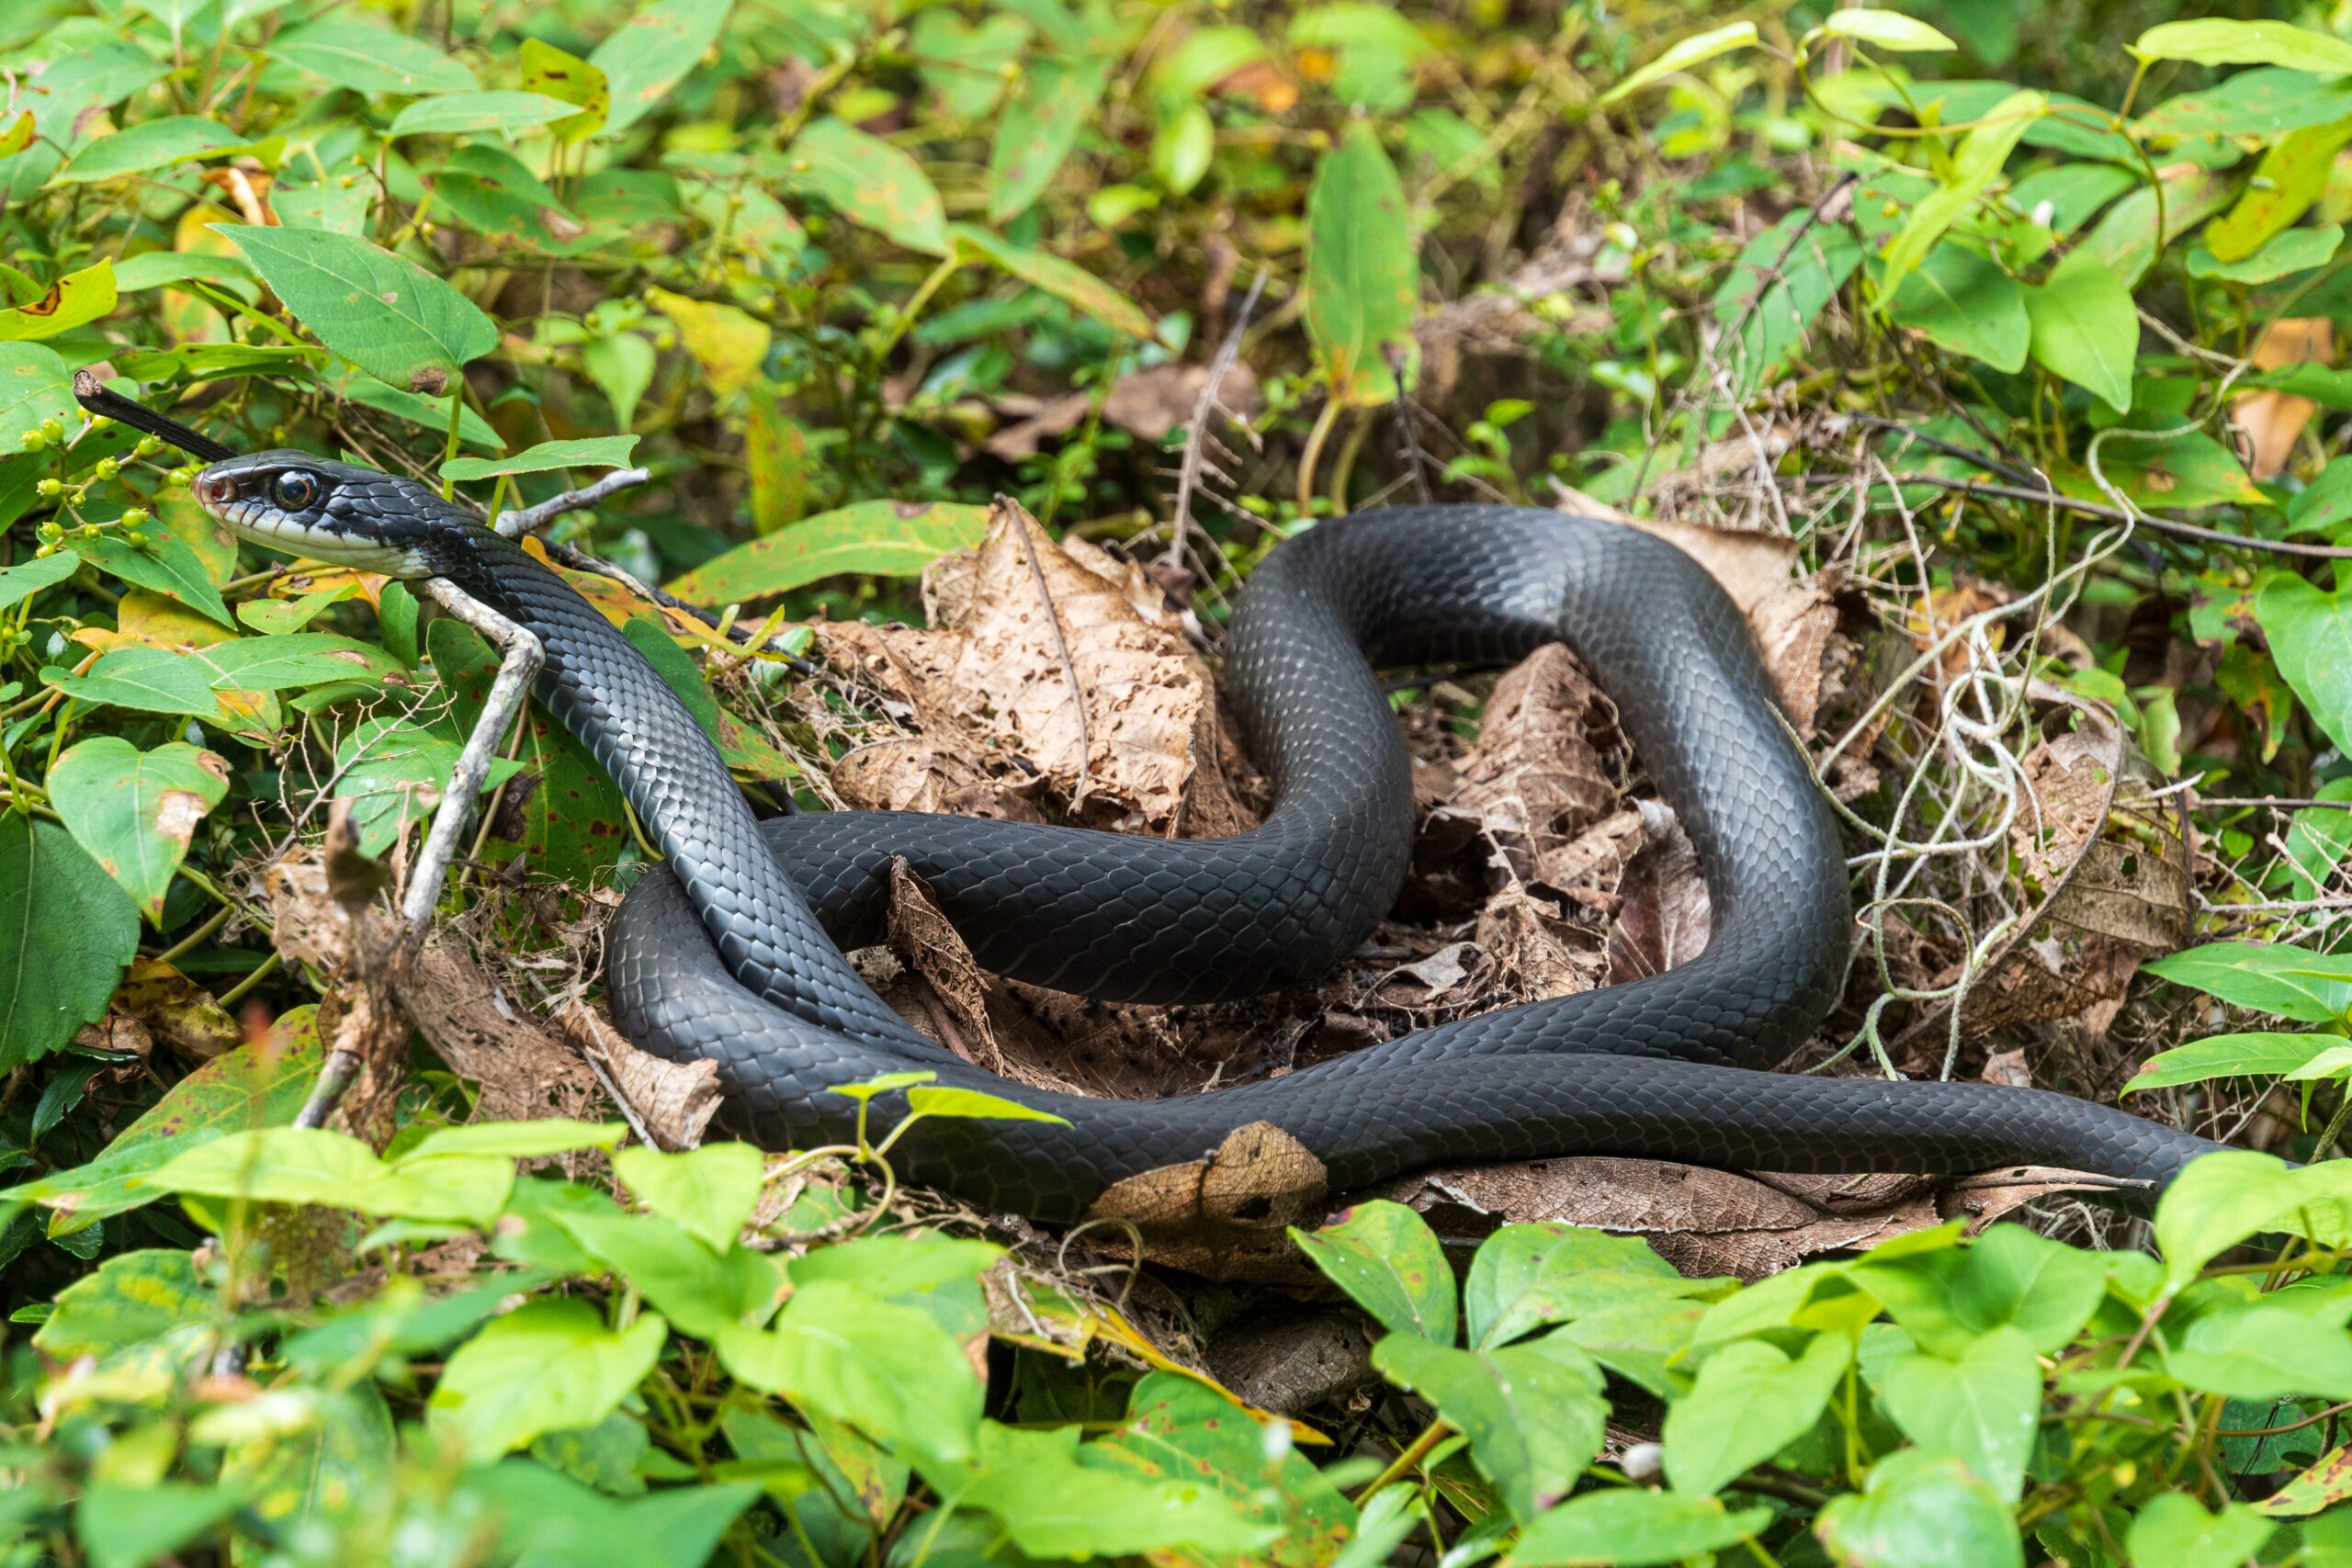 Nuisance Black Racer Snake. Emergency Snake Removal